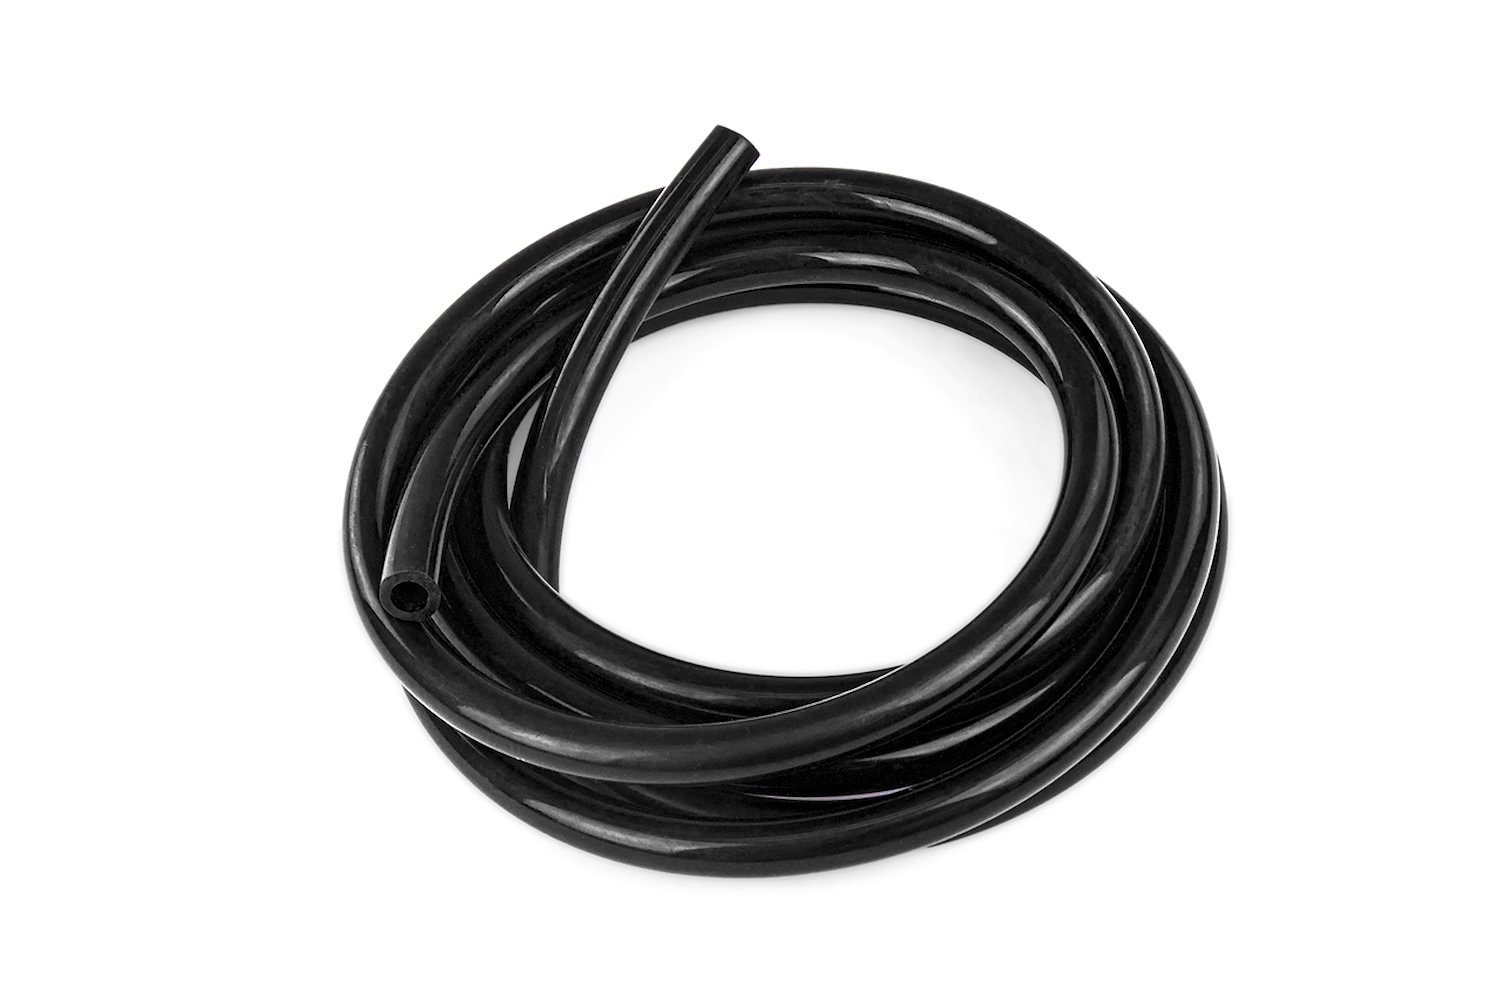 HTSVH8-BLKx5 High-Temperature Silicone Vacuum Hose Tubing, 5/16 in. ID, 5 ft. Roll, Black